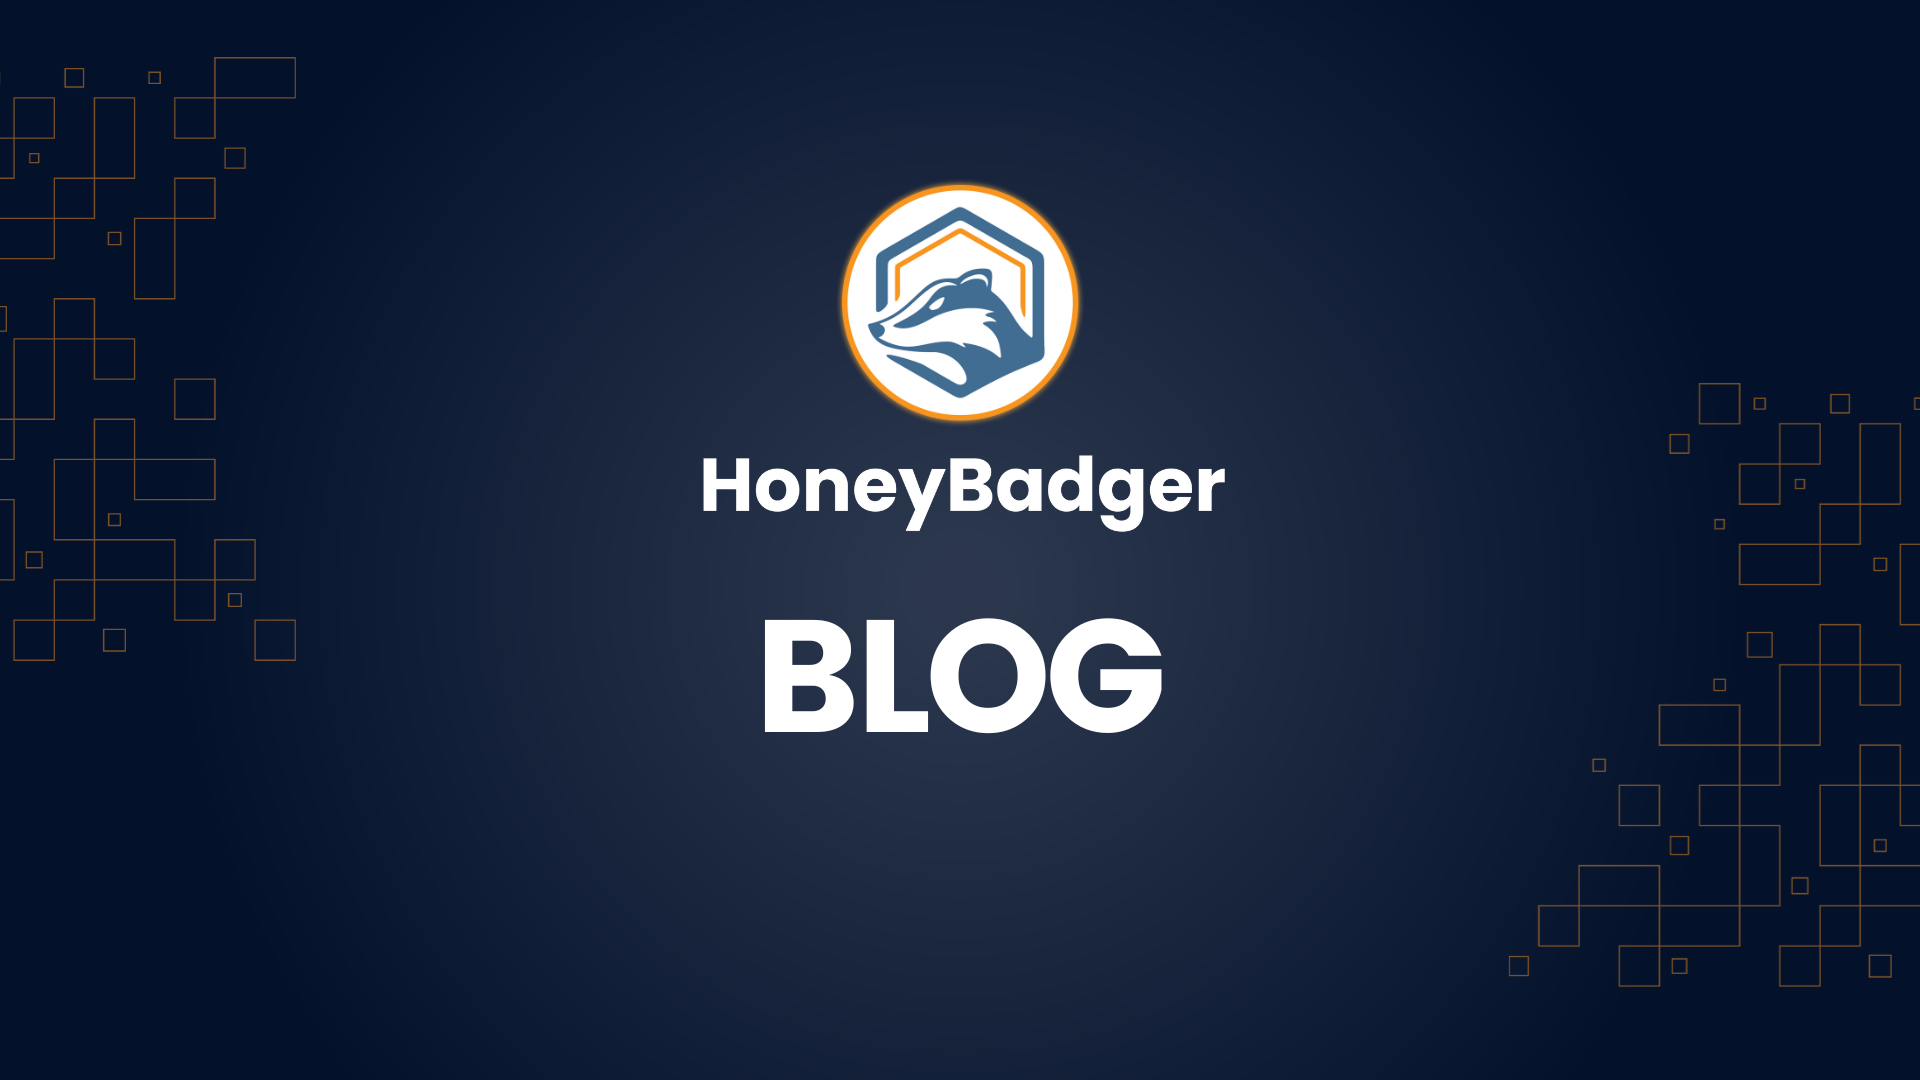 HoneyBadger blog